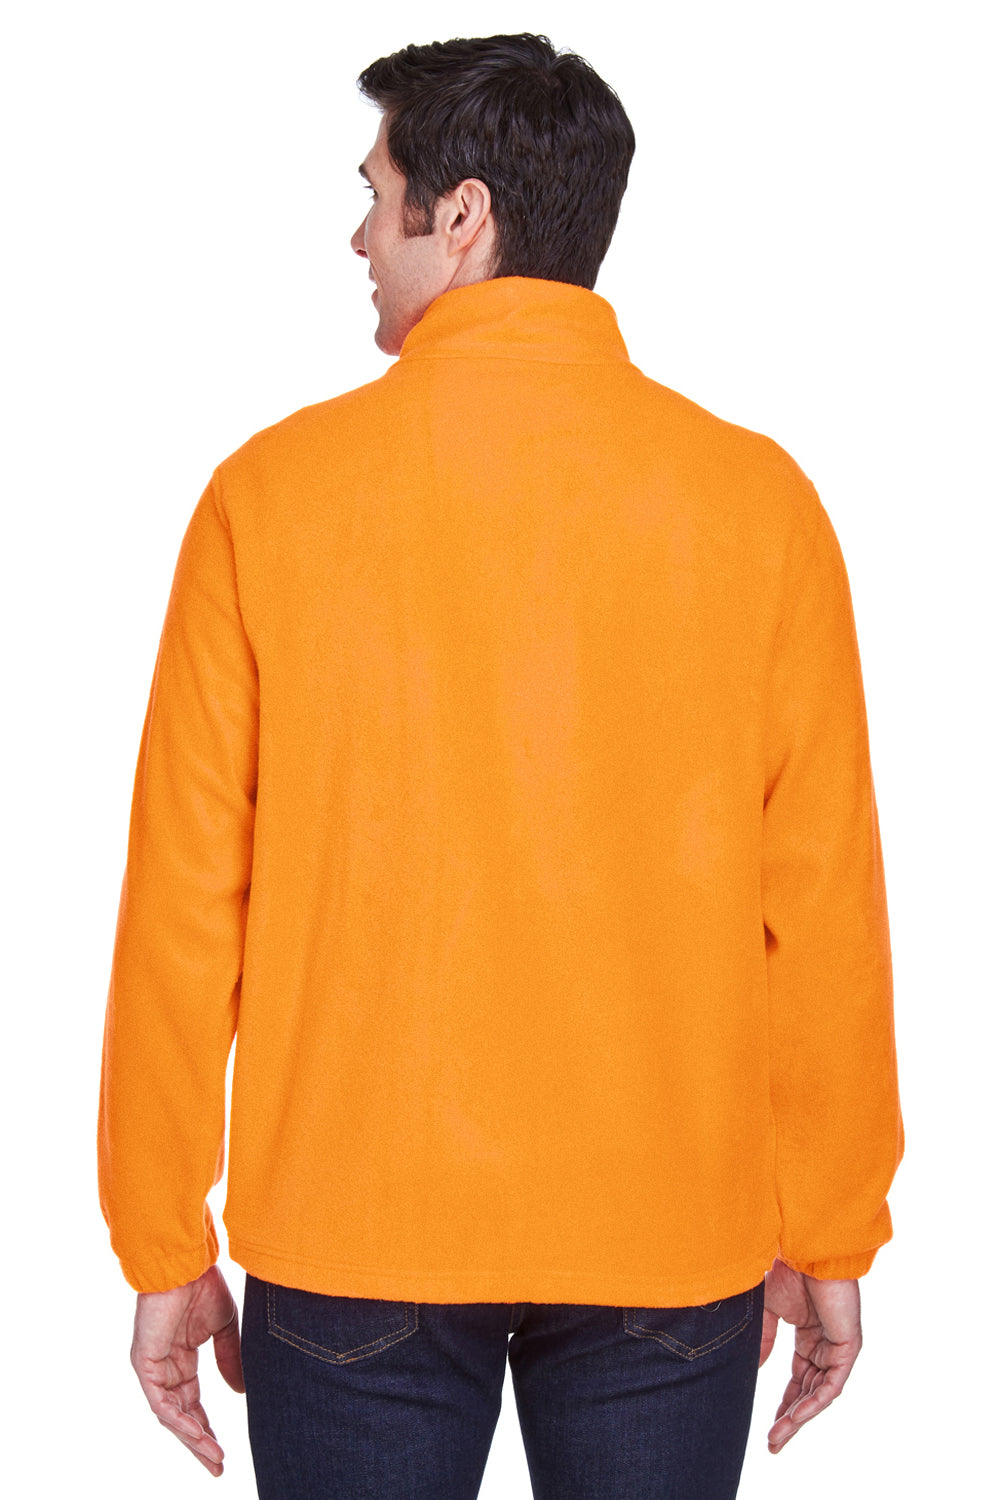 Harriton M990 Mens Full Zip Fleece Jacket Safety Orange Back